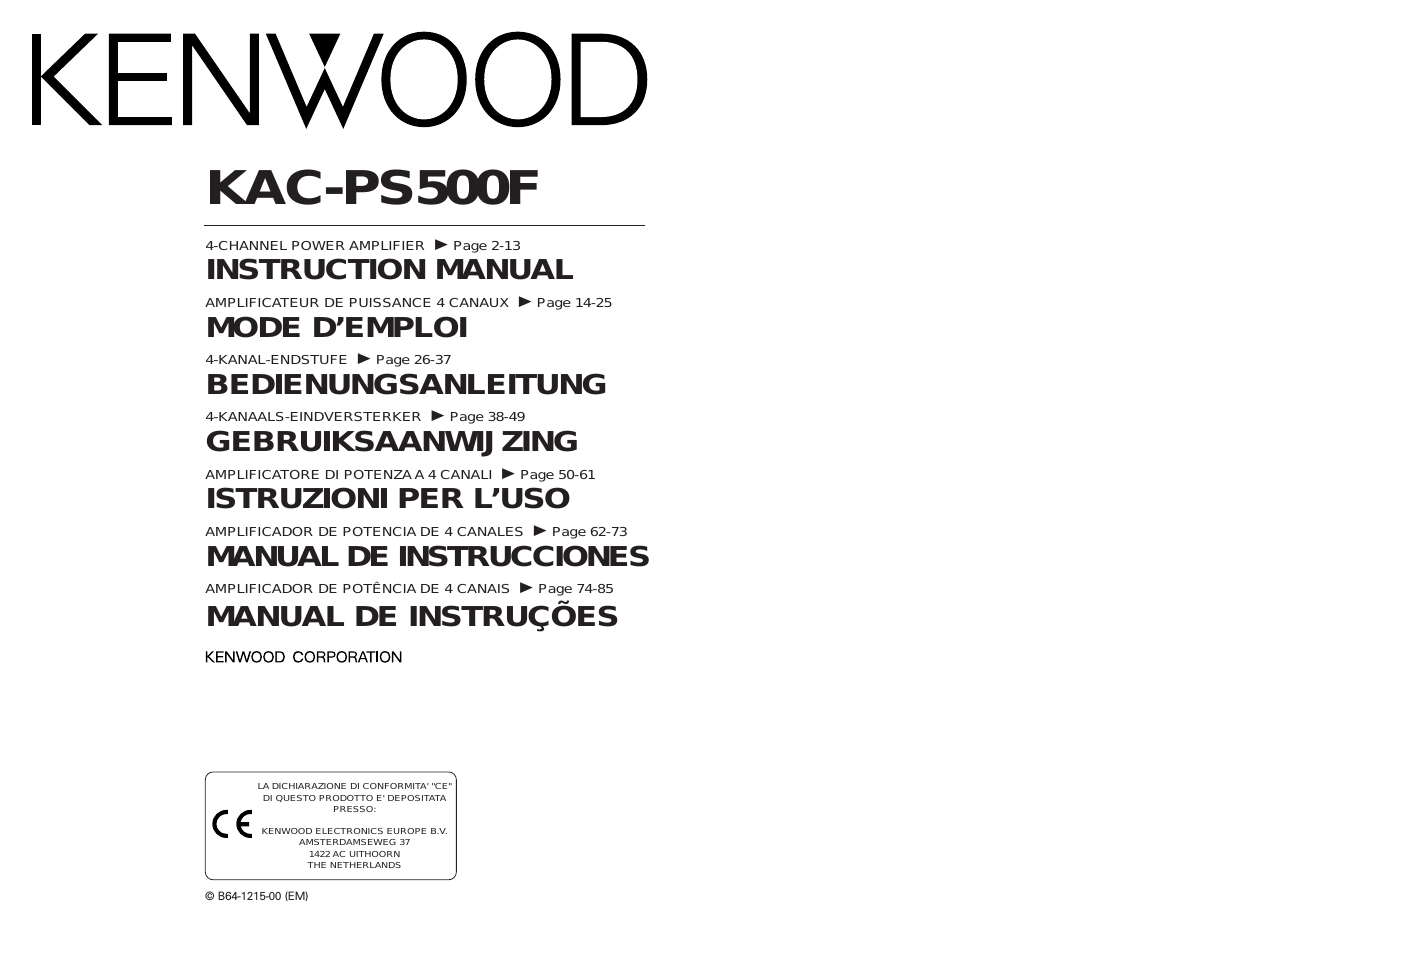 KAC-PS500F